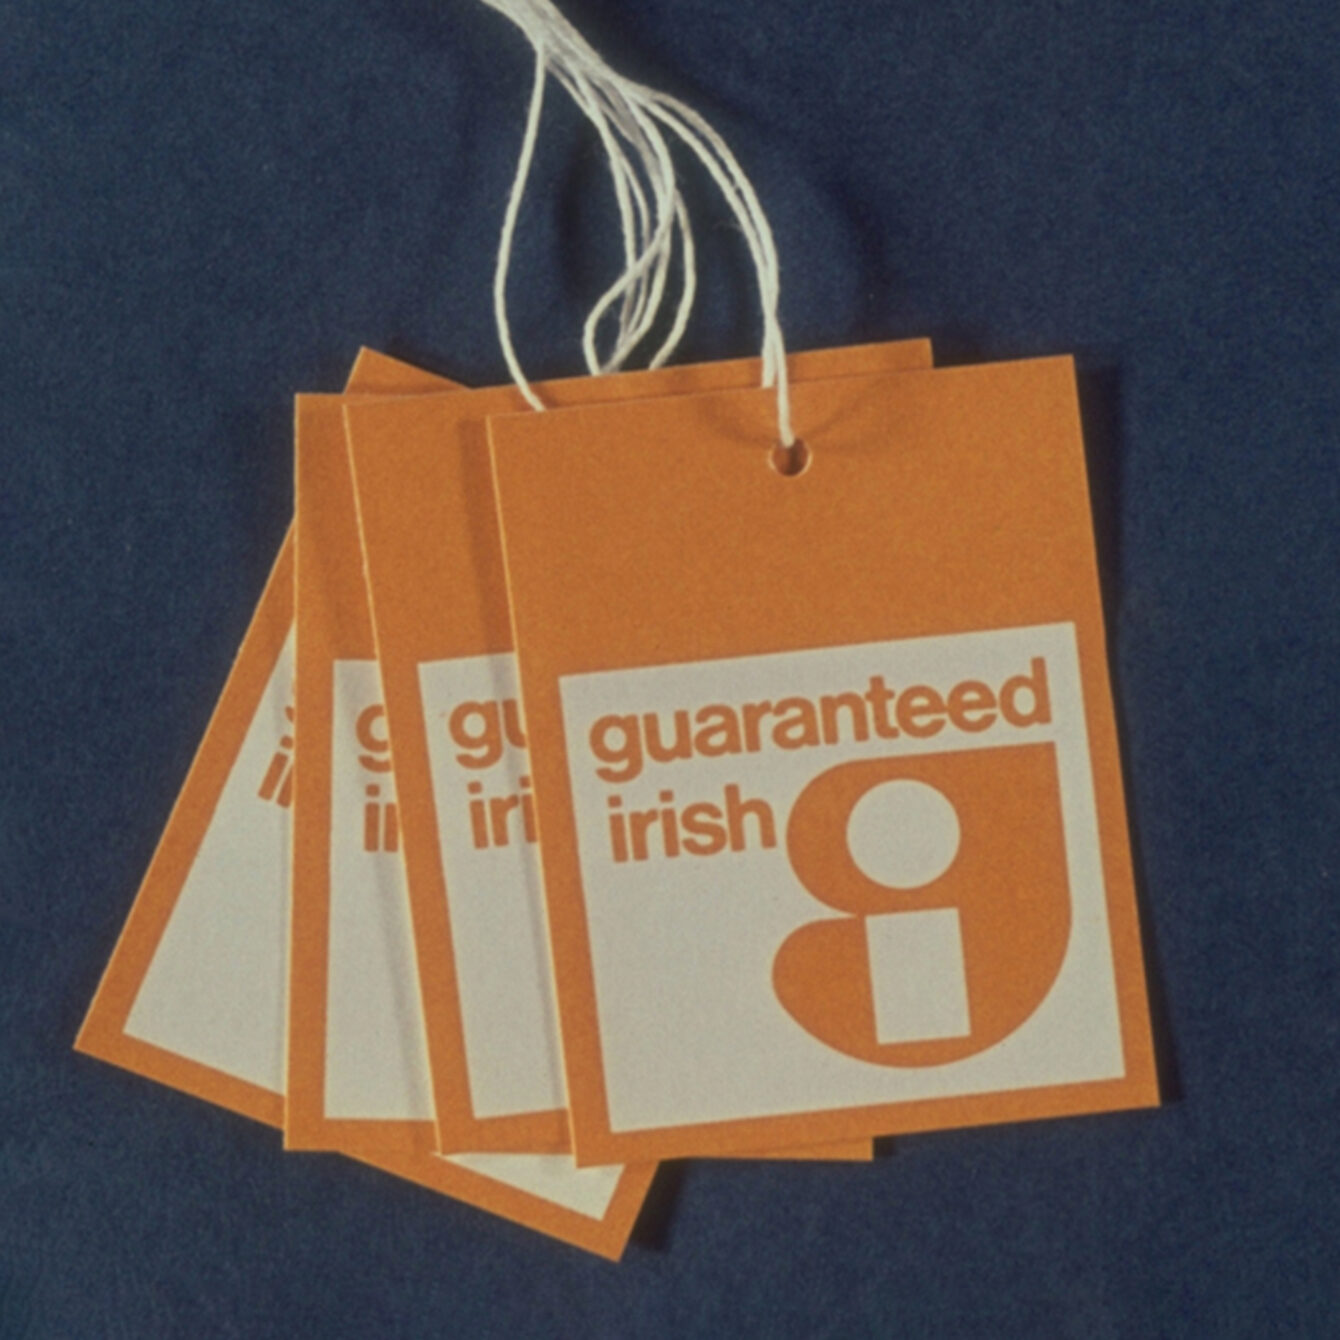 GI irish original logo square